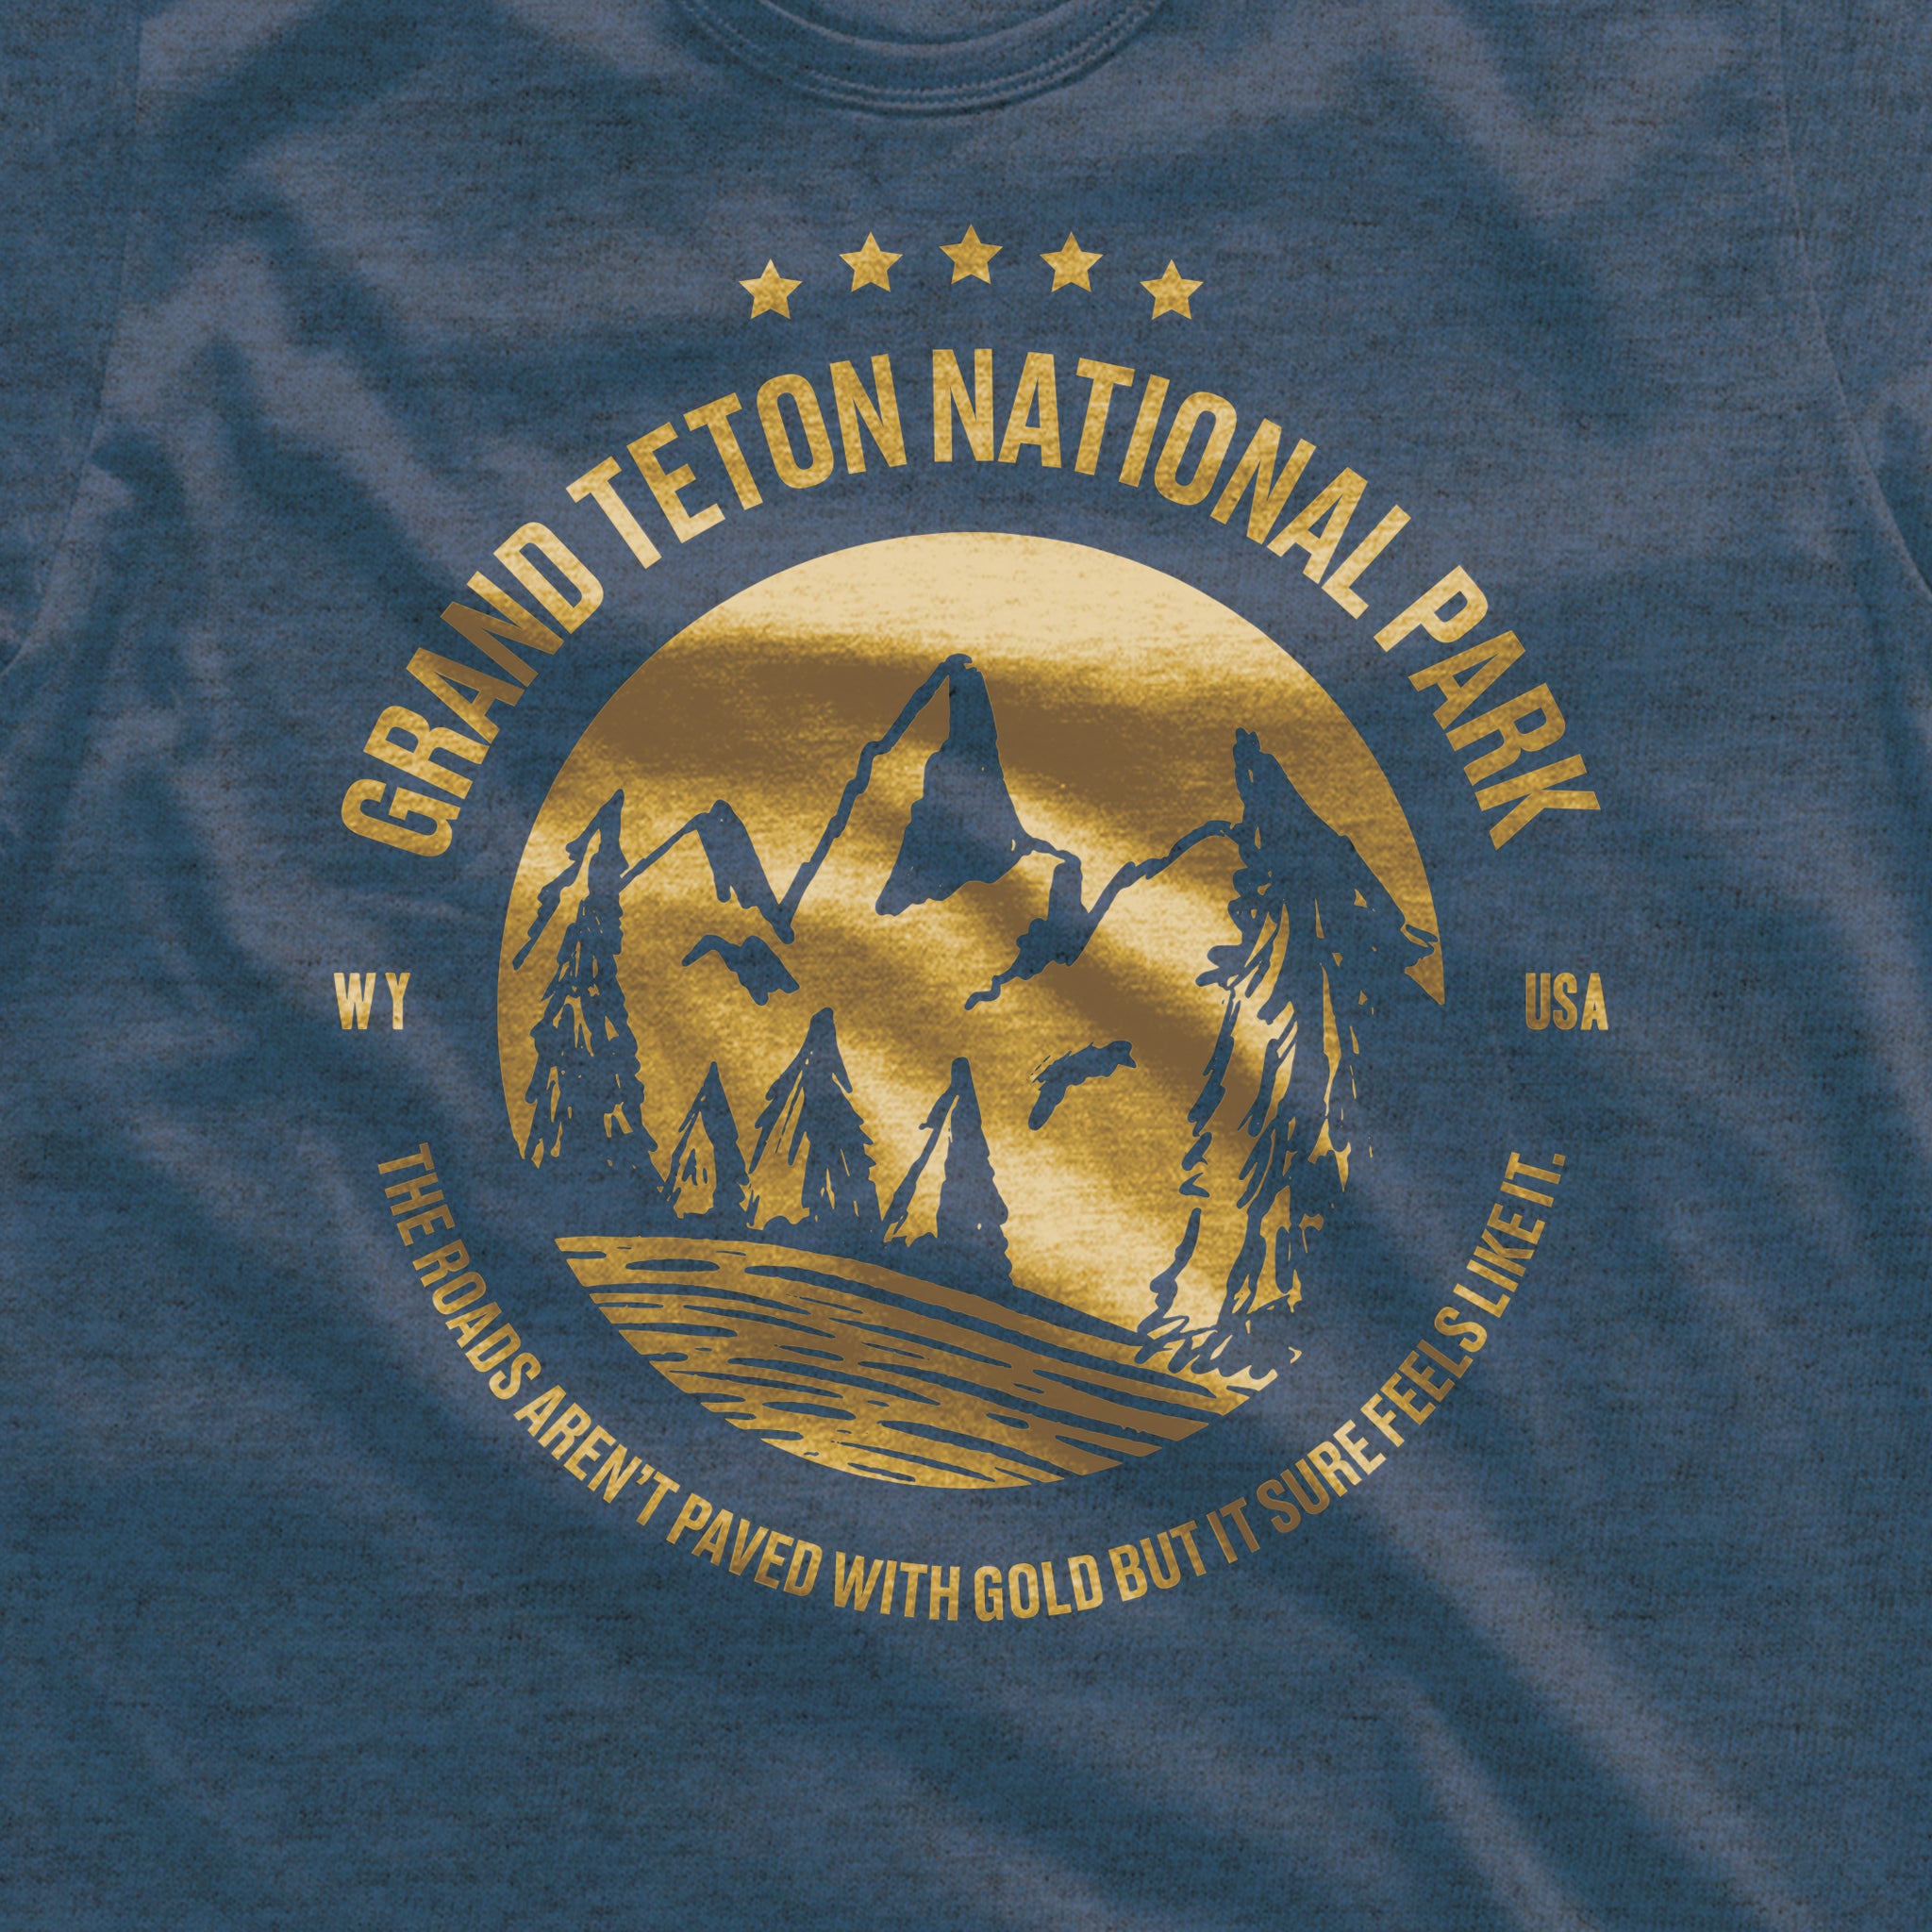 Grand Teton National Park Tee